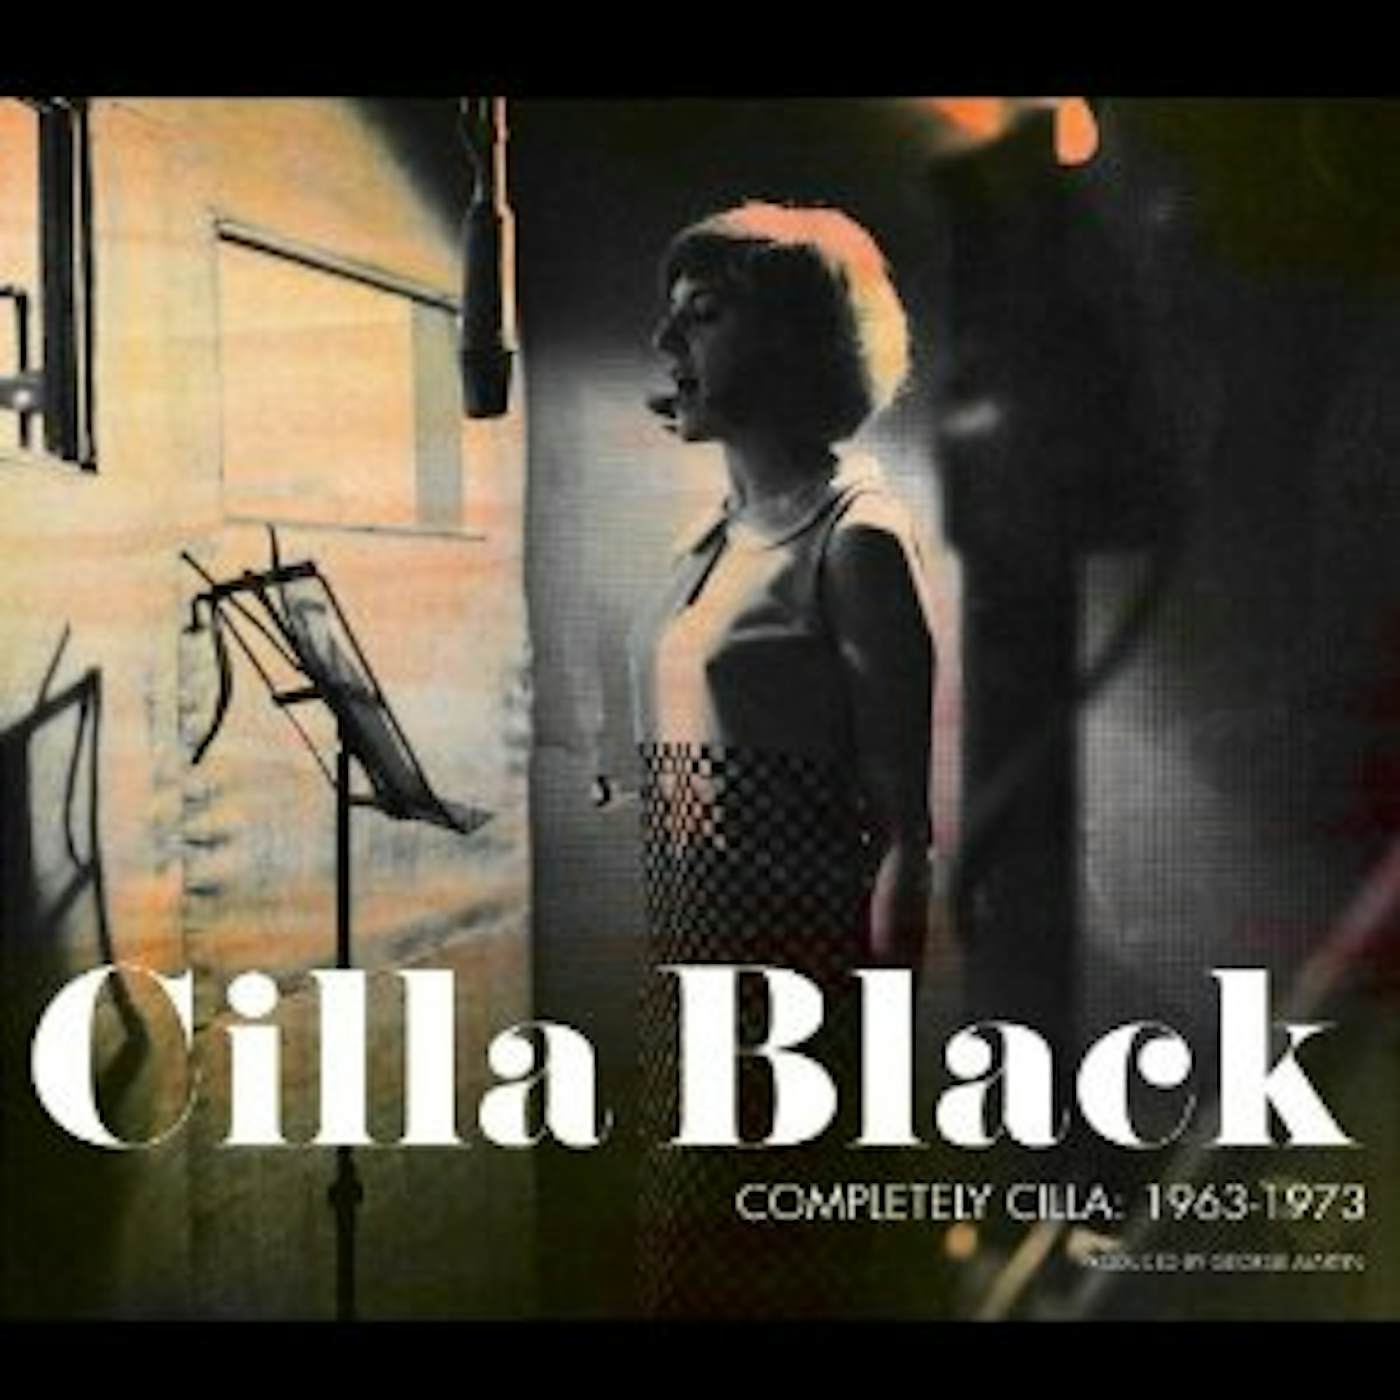 Cilla Black COMPLETELY CILLA 1963 - 1973 CD